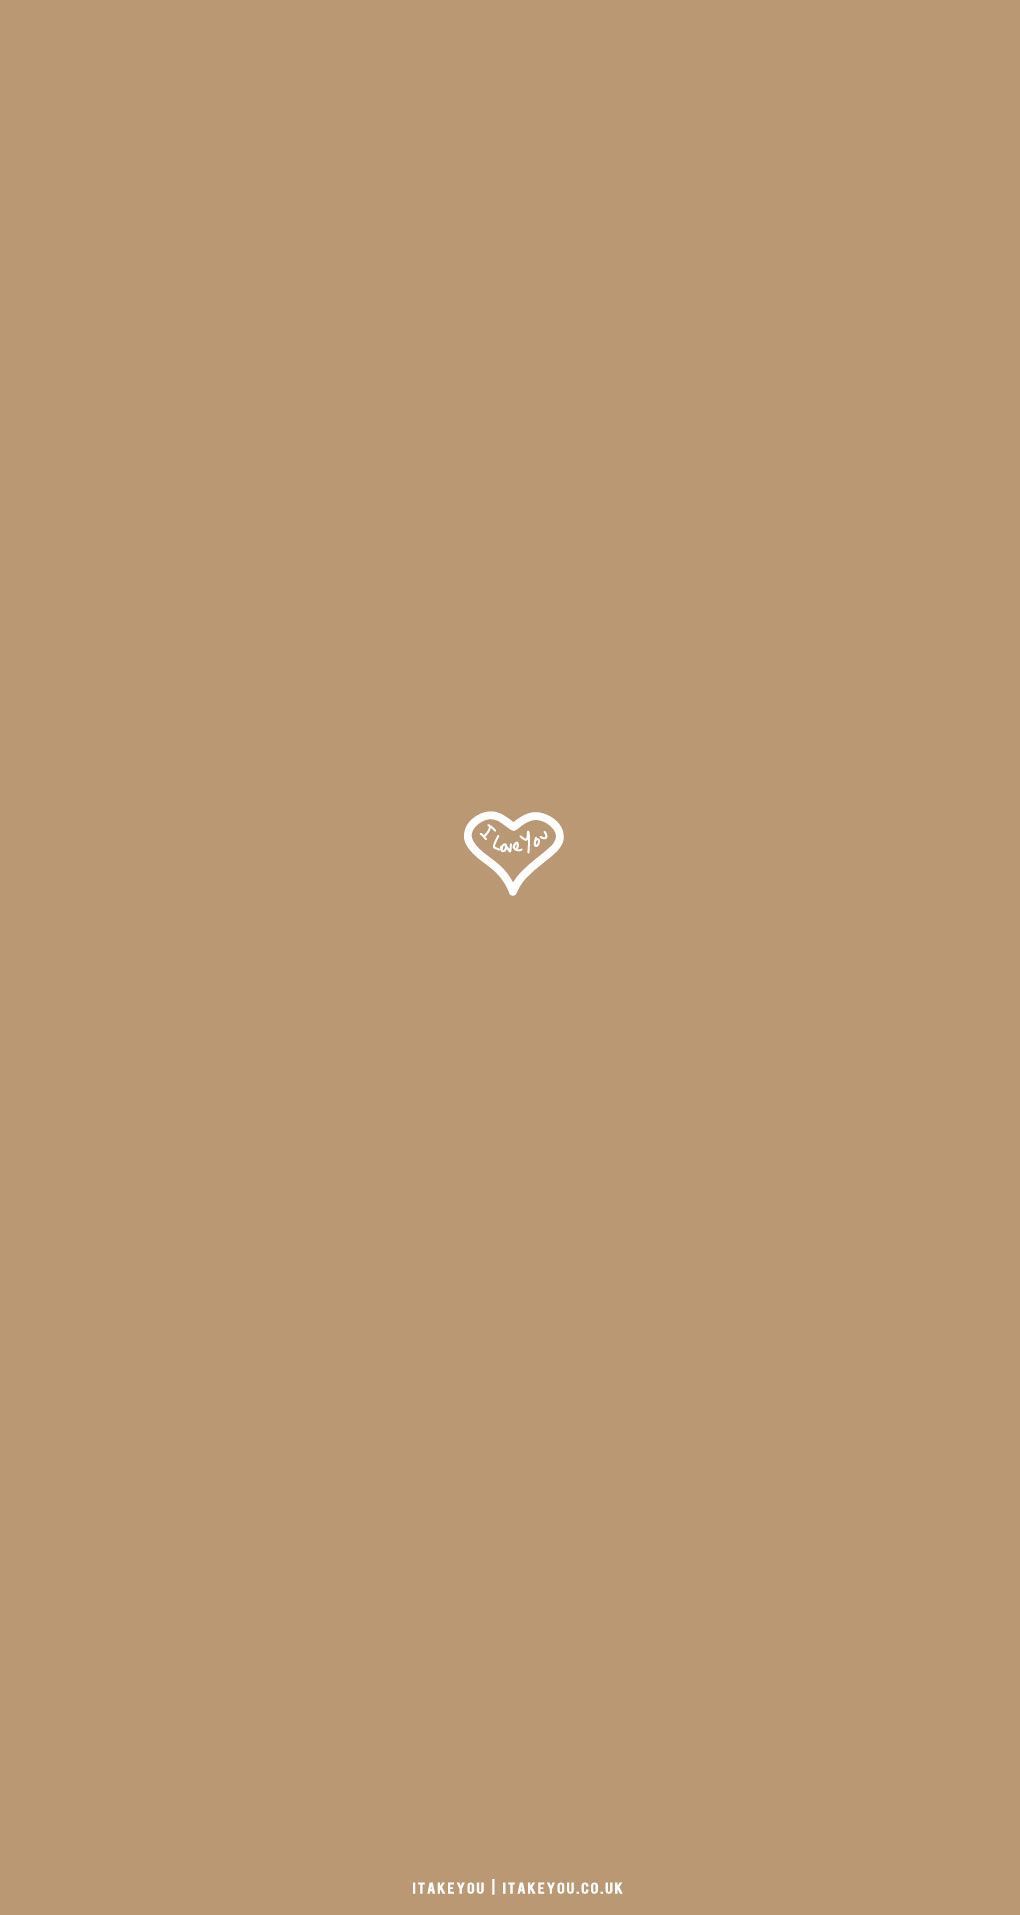  Einfach Hintergrundbild 1020x1915. Cute Brown Aesthetic Wallpaper for Phone : Love Heart I Take You. Wedding Readings. Wedding Ideas